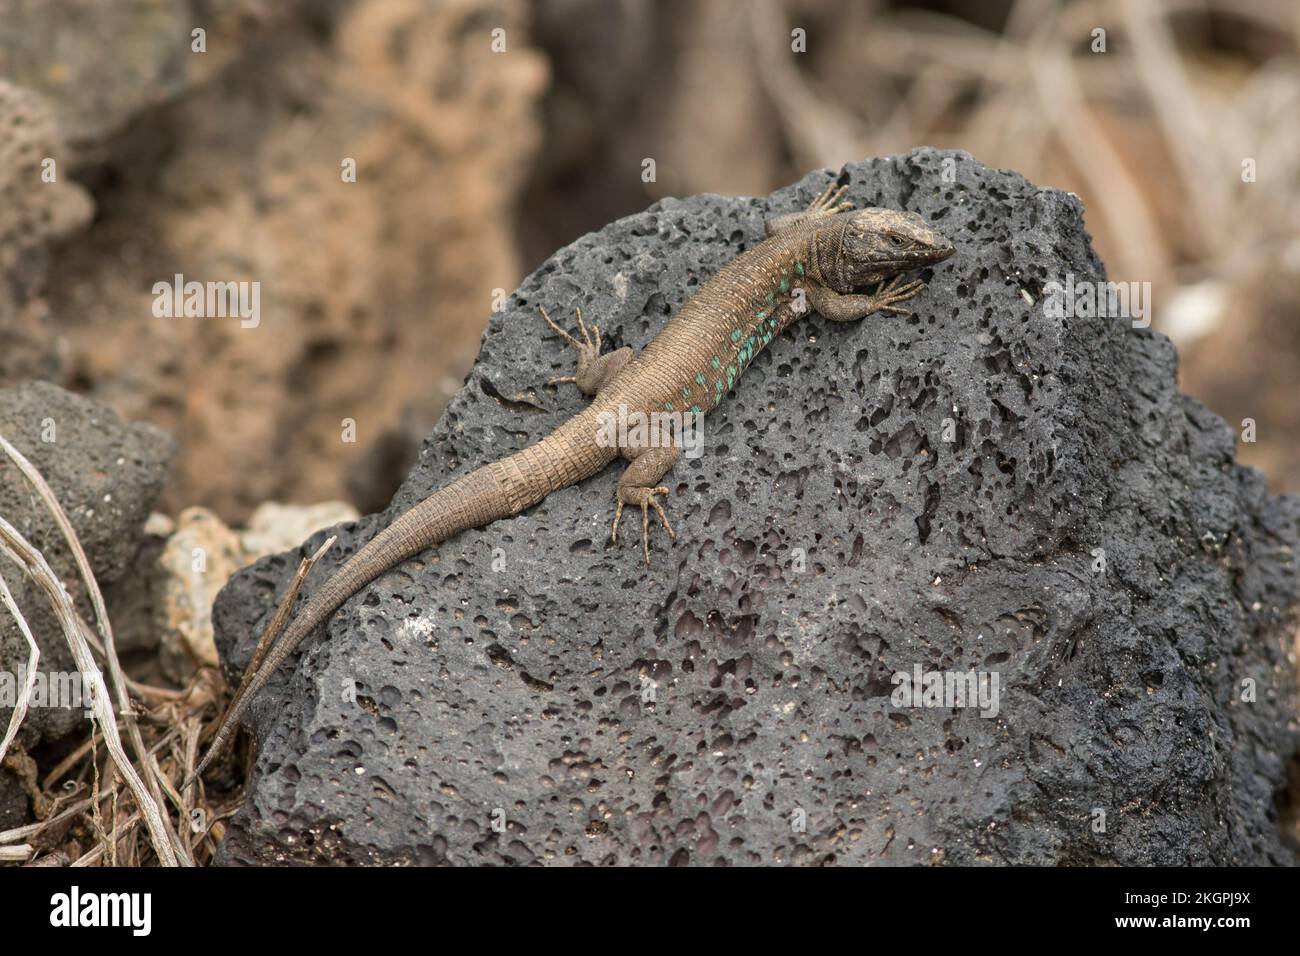 Atlantic lizard (Gallotia atlantica) crawling on rock Stock Photo